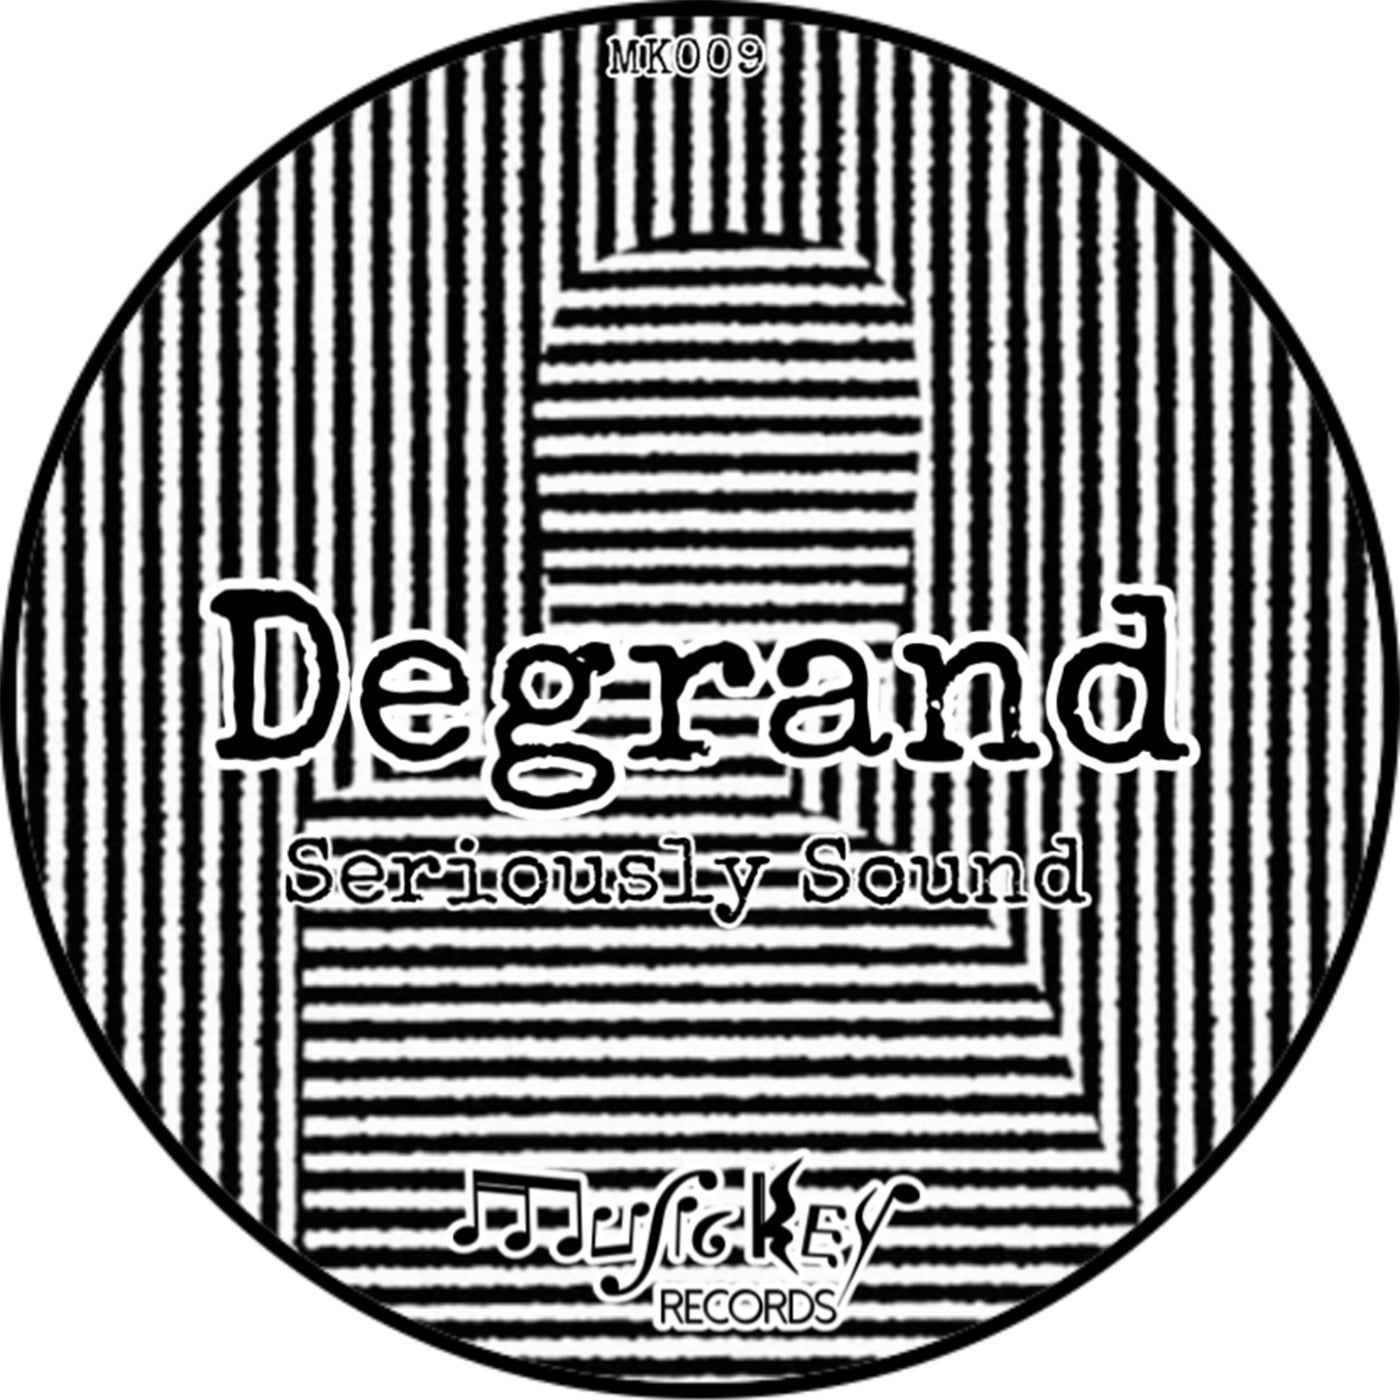 Degrand – Seriously Sound [MK009]